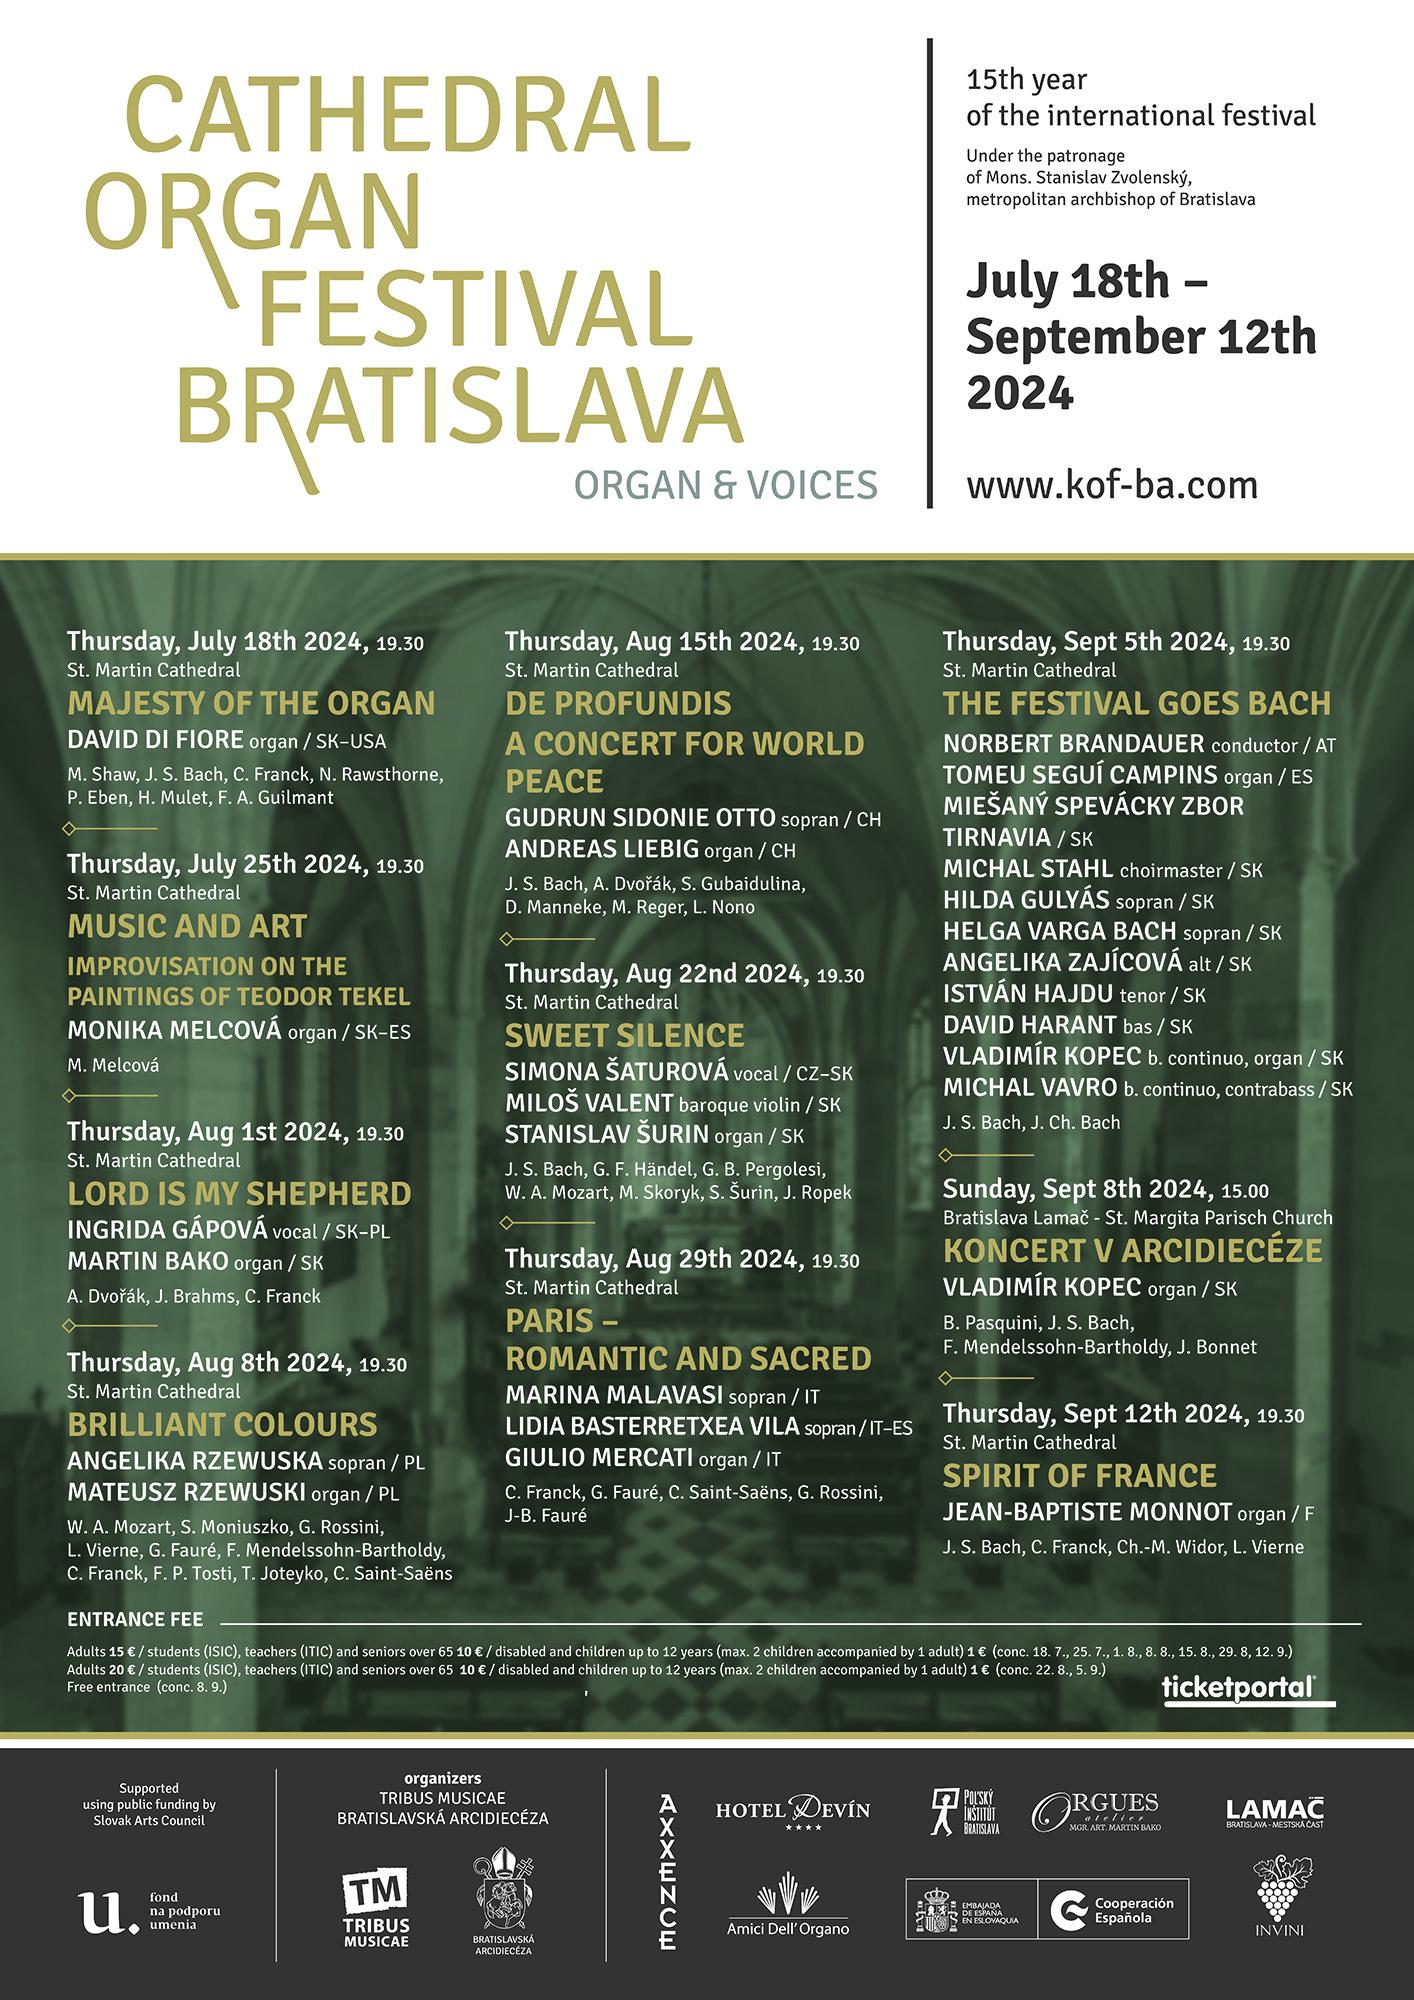 Bratislava, katedrala, festival, organ, plagat